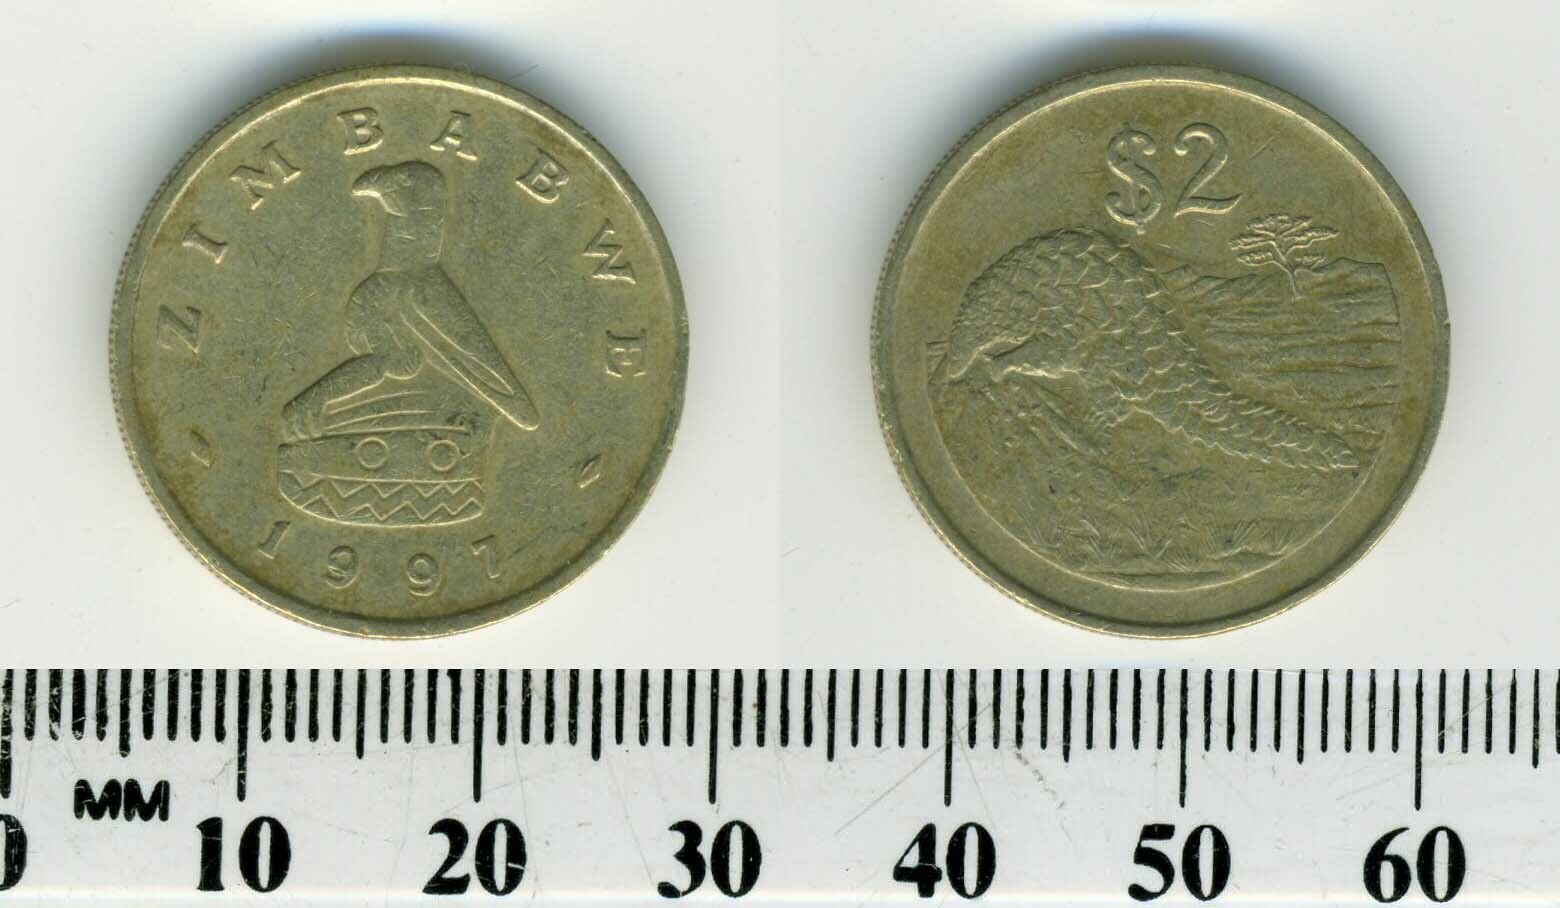 Zimbabwe 1997 - 2 Dollars Coin - Bird Statue - Pangolin Below Denomination